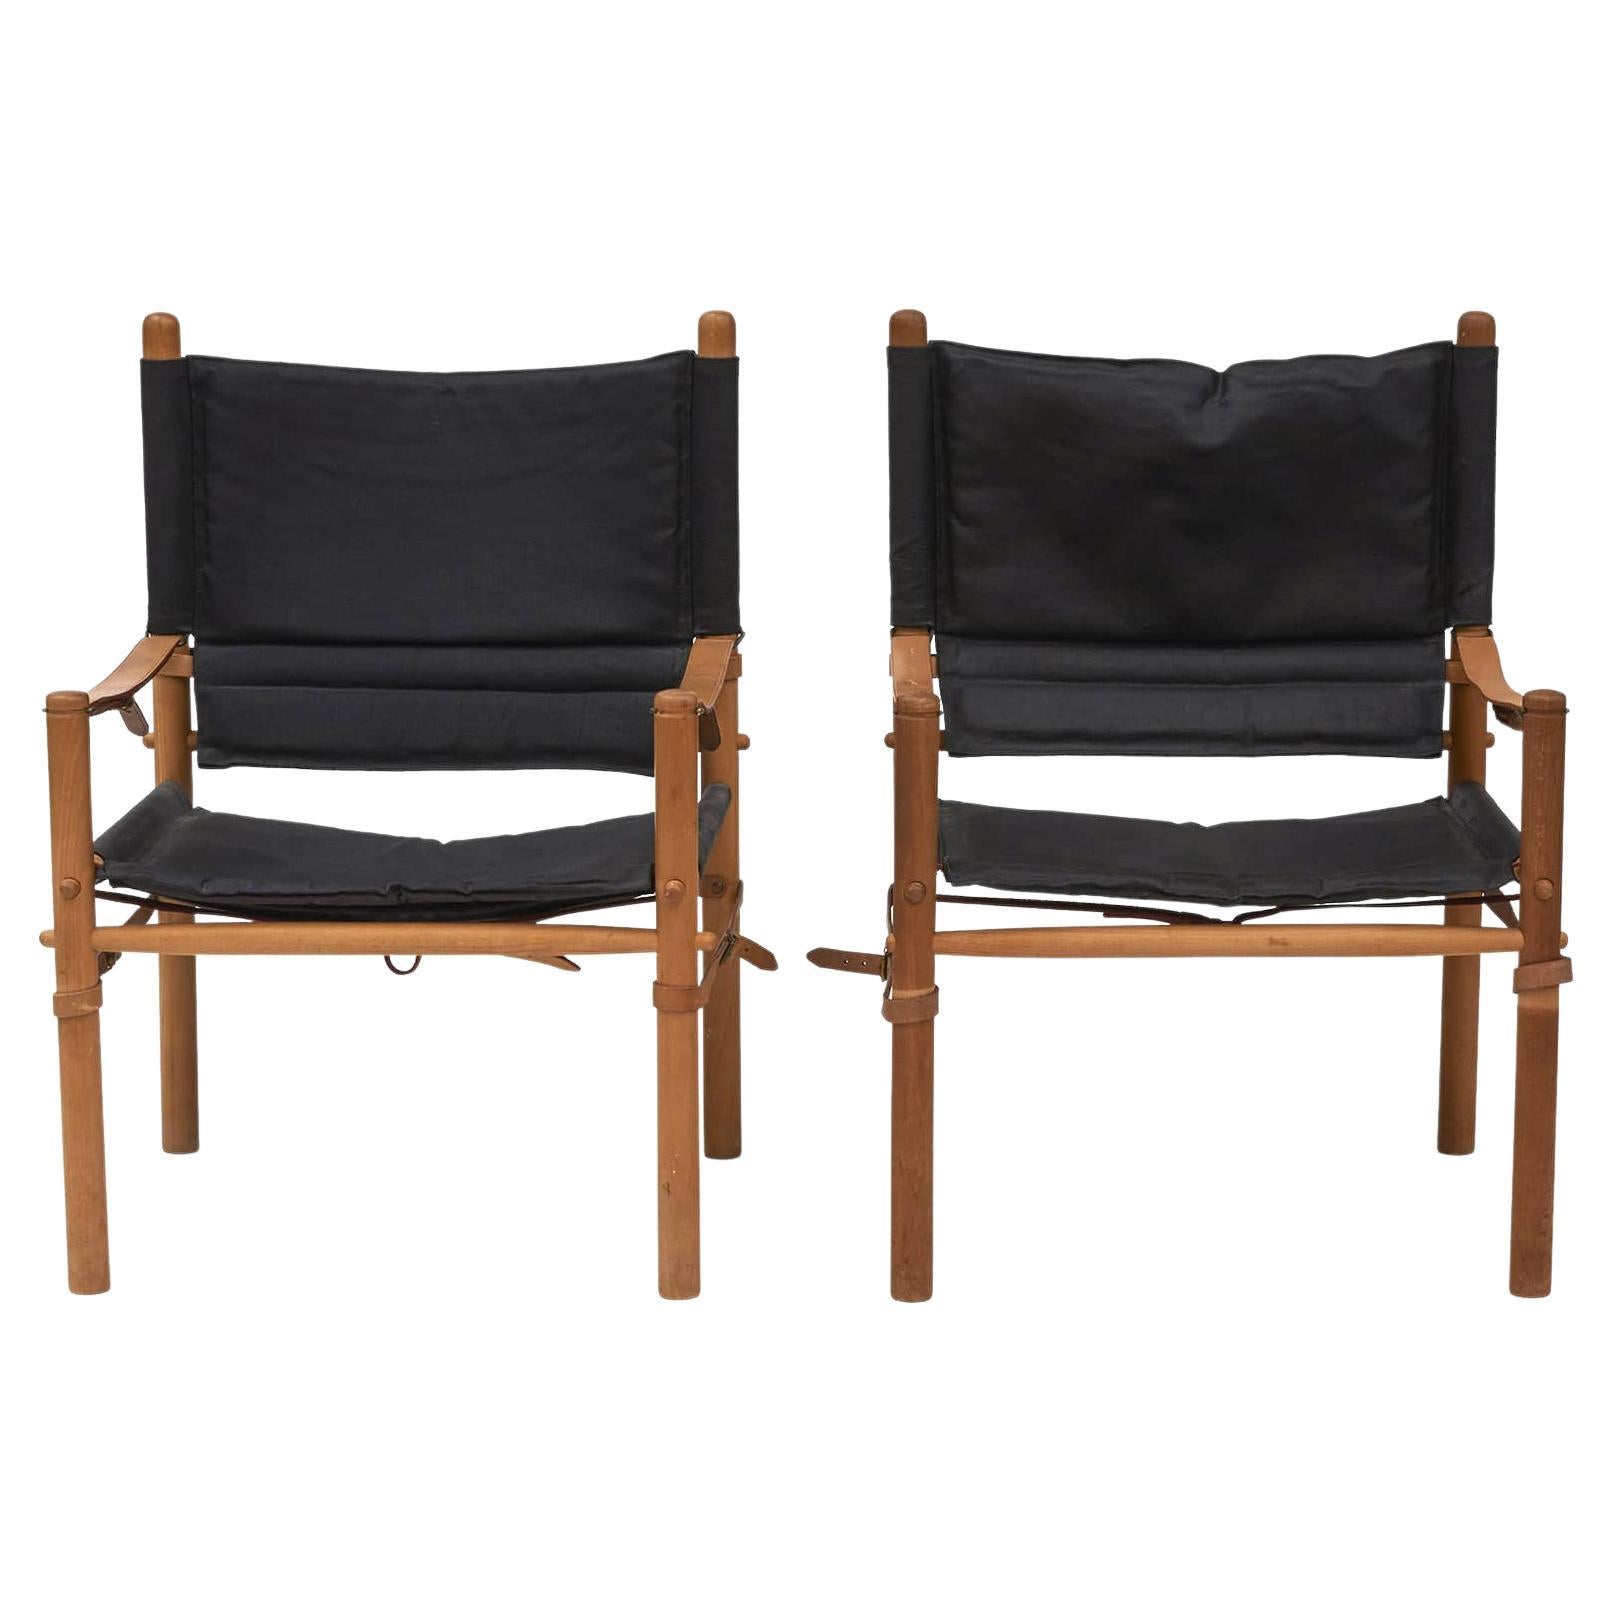 Pair of Axel Thygesen Oasis Safari Chairs for Interna, Denmark, 1960s